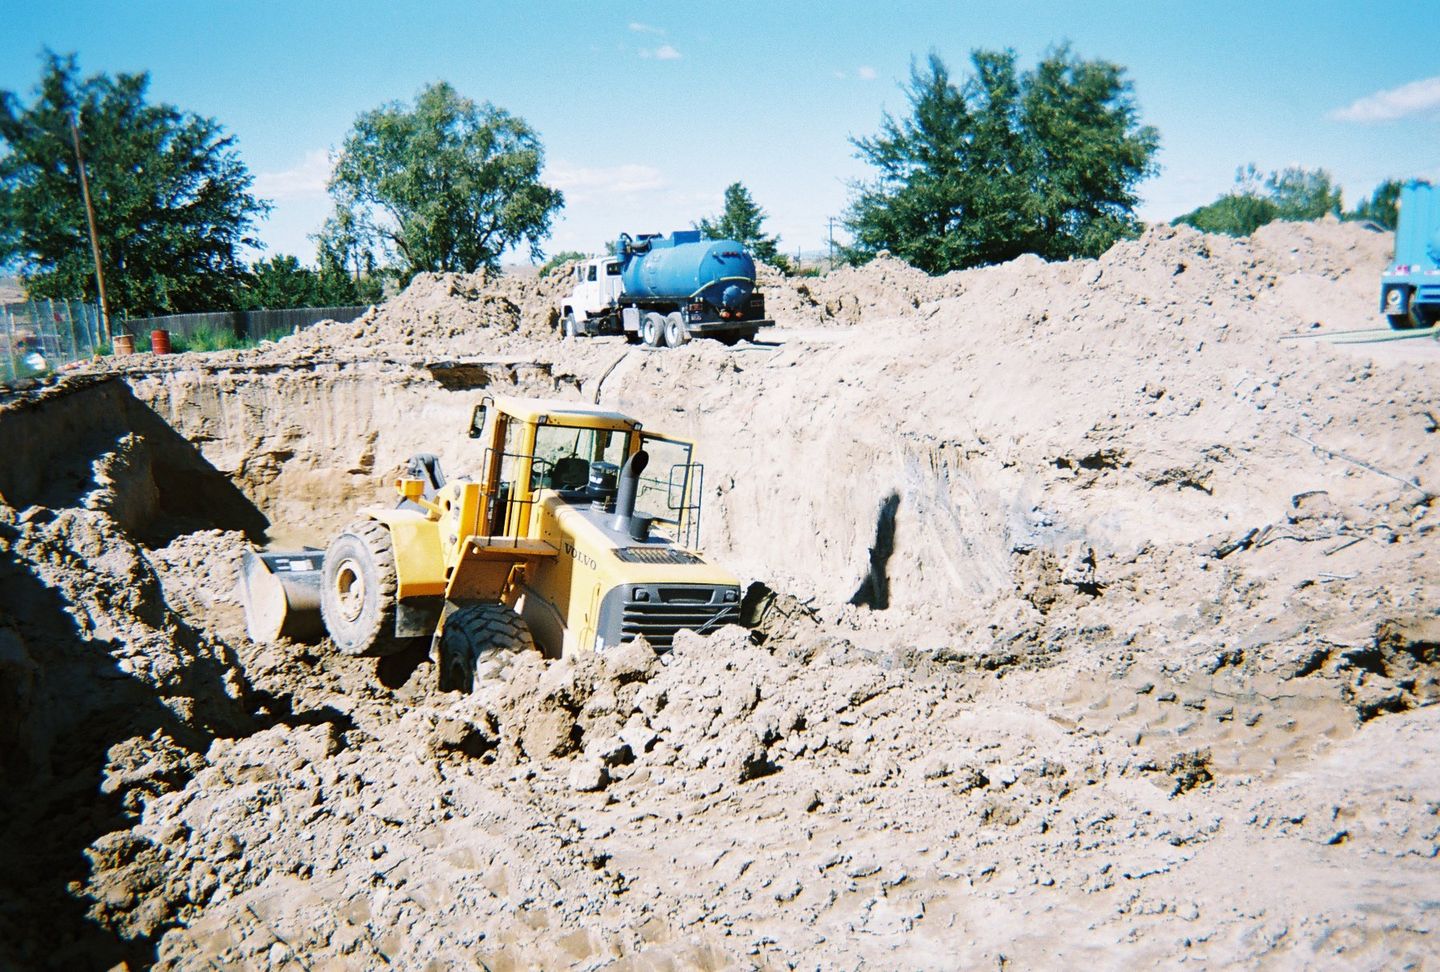 Bulldozer Excavating Dirt - Equipment Hauling Services in Pueblo,CO and the Surrounding Area